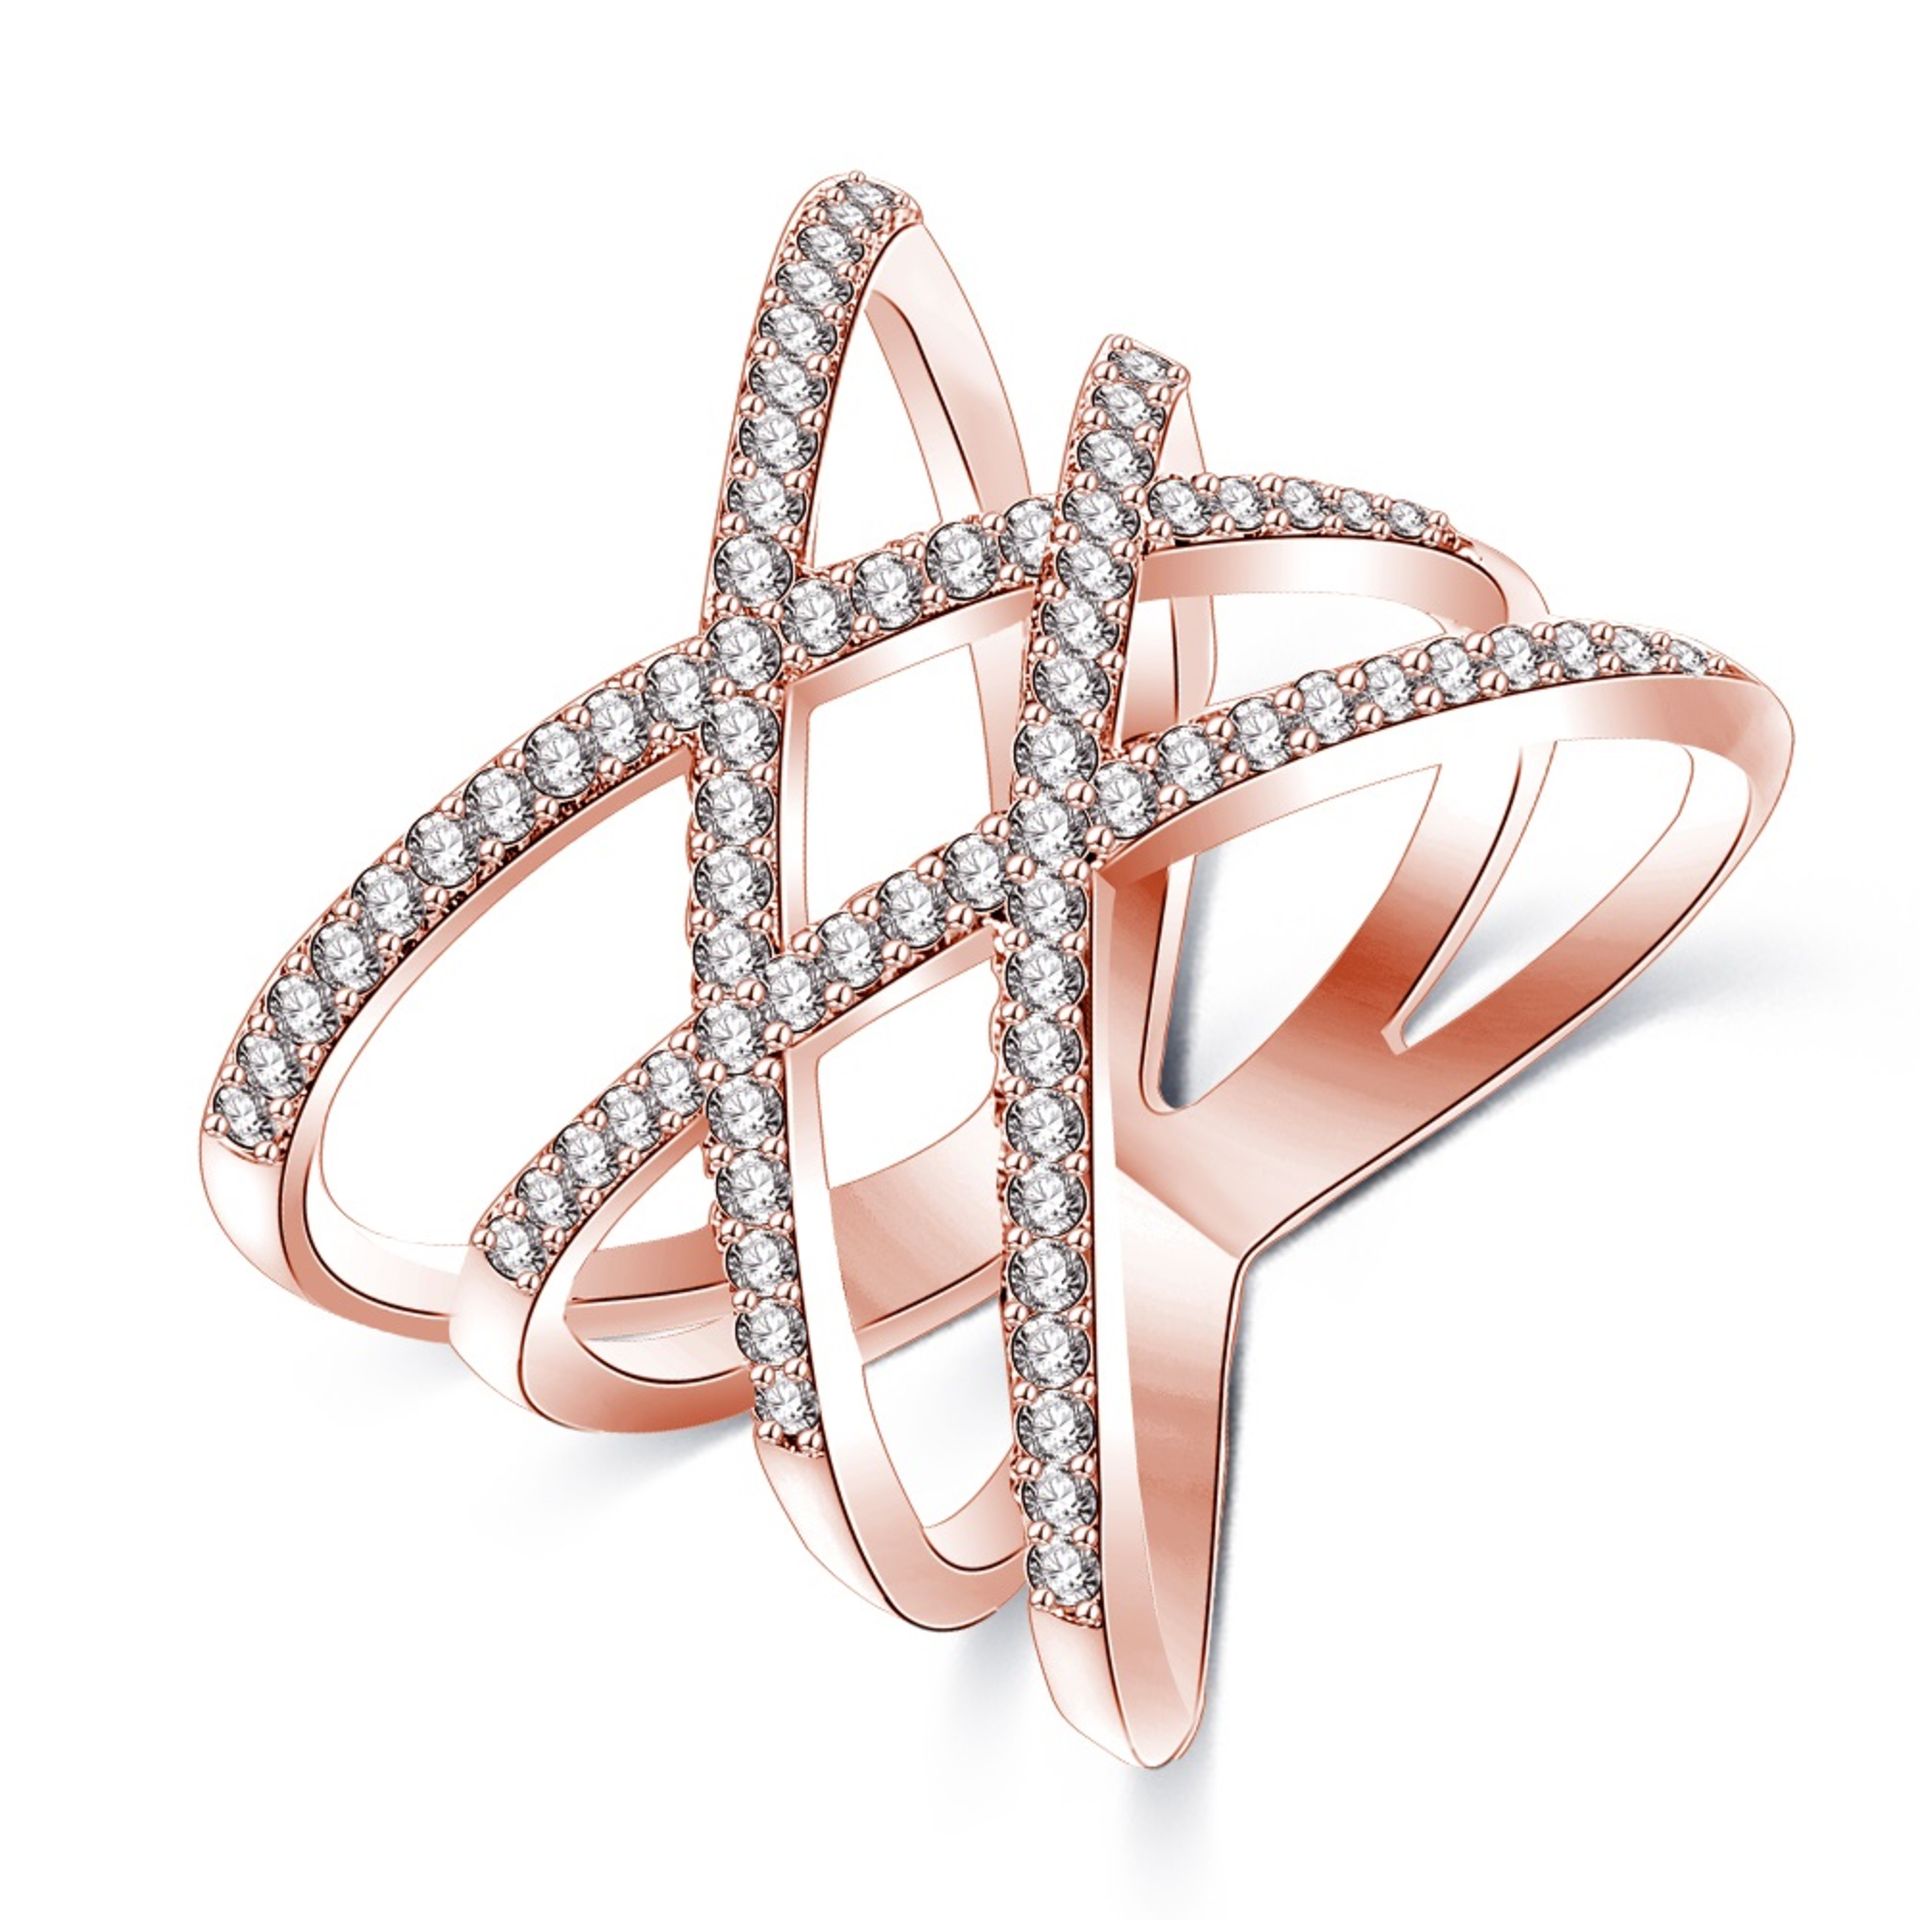 V Brand New Rose Colour Swarovski Elemetns Double Cross Over Ring X 2 YOUR BID PRICE TO BE